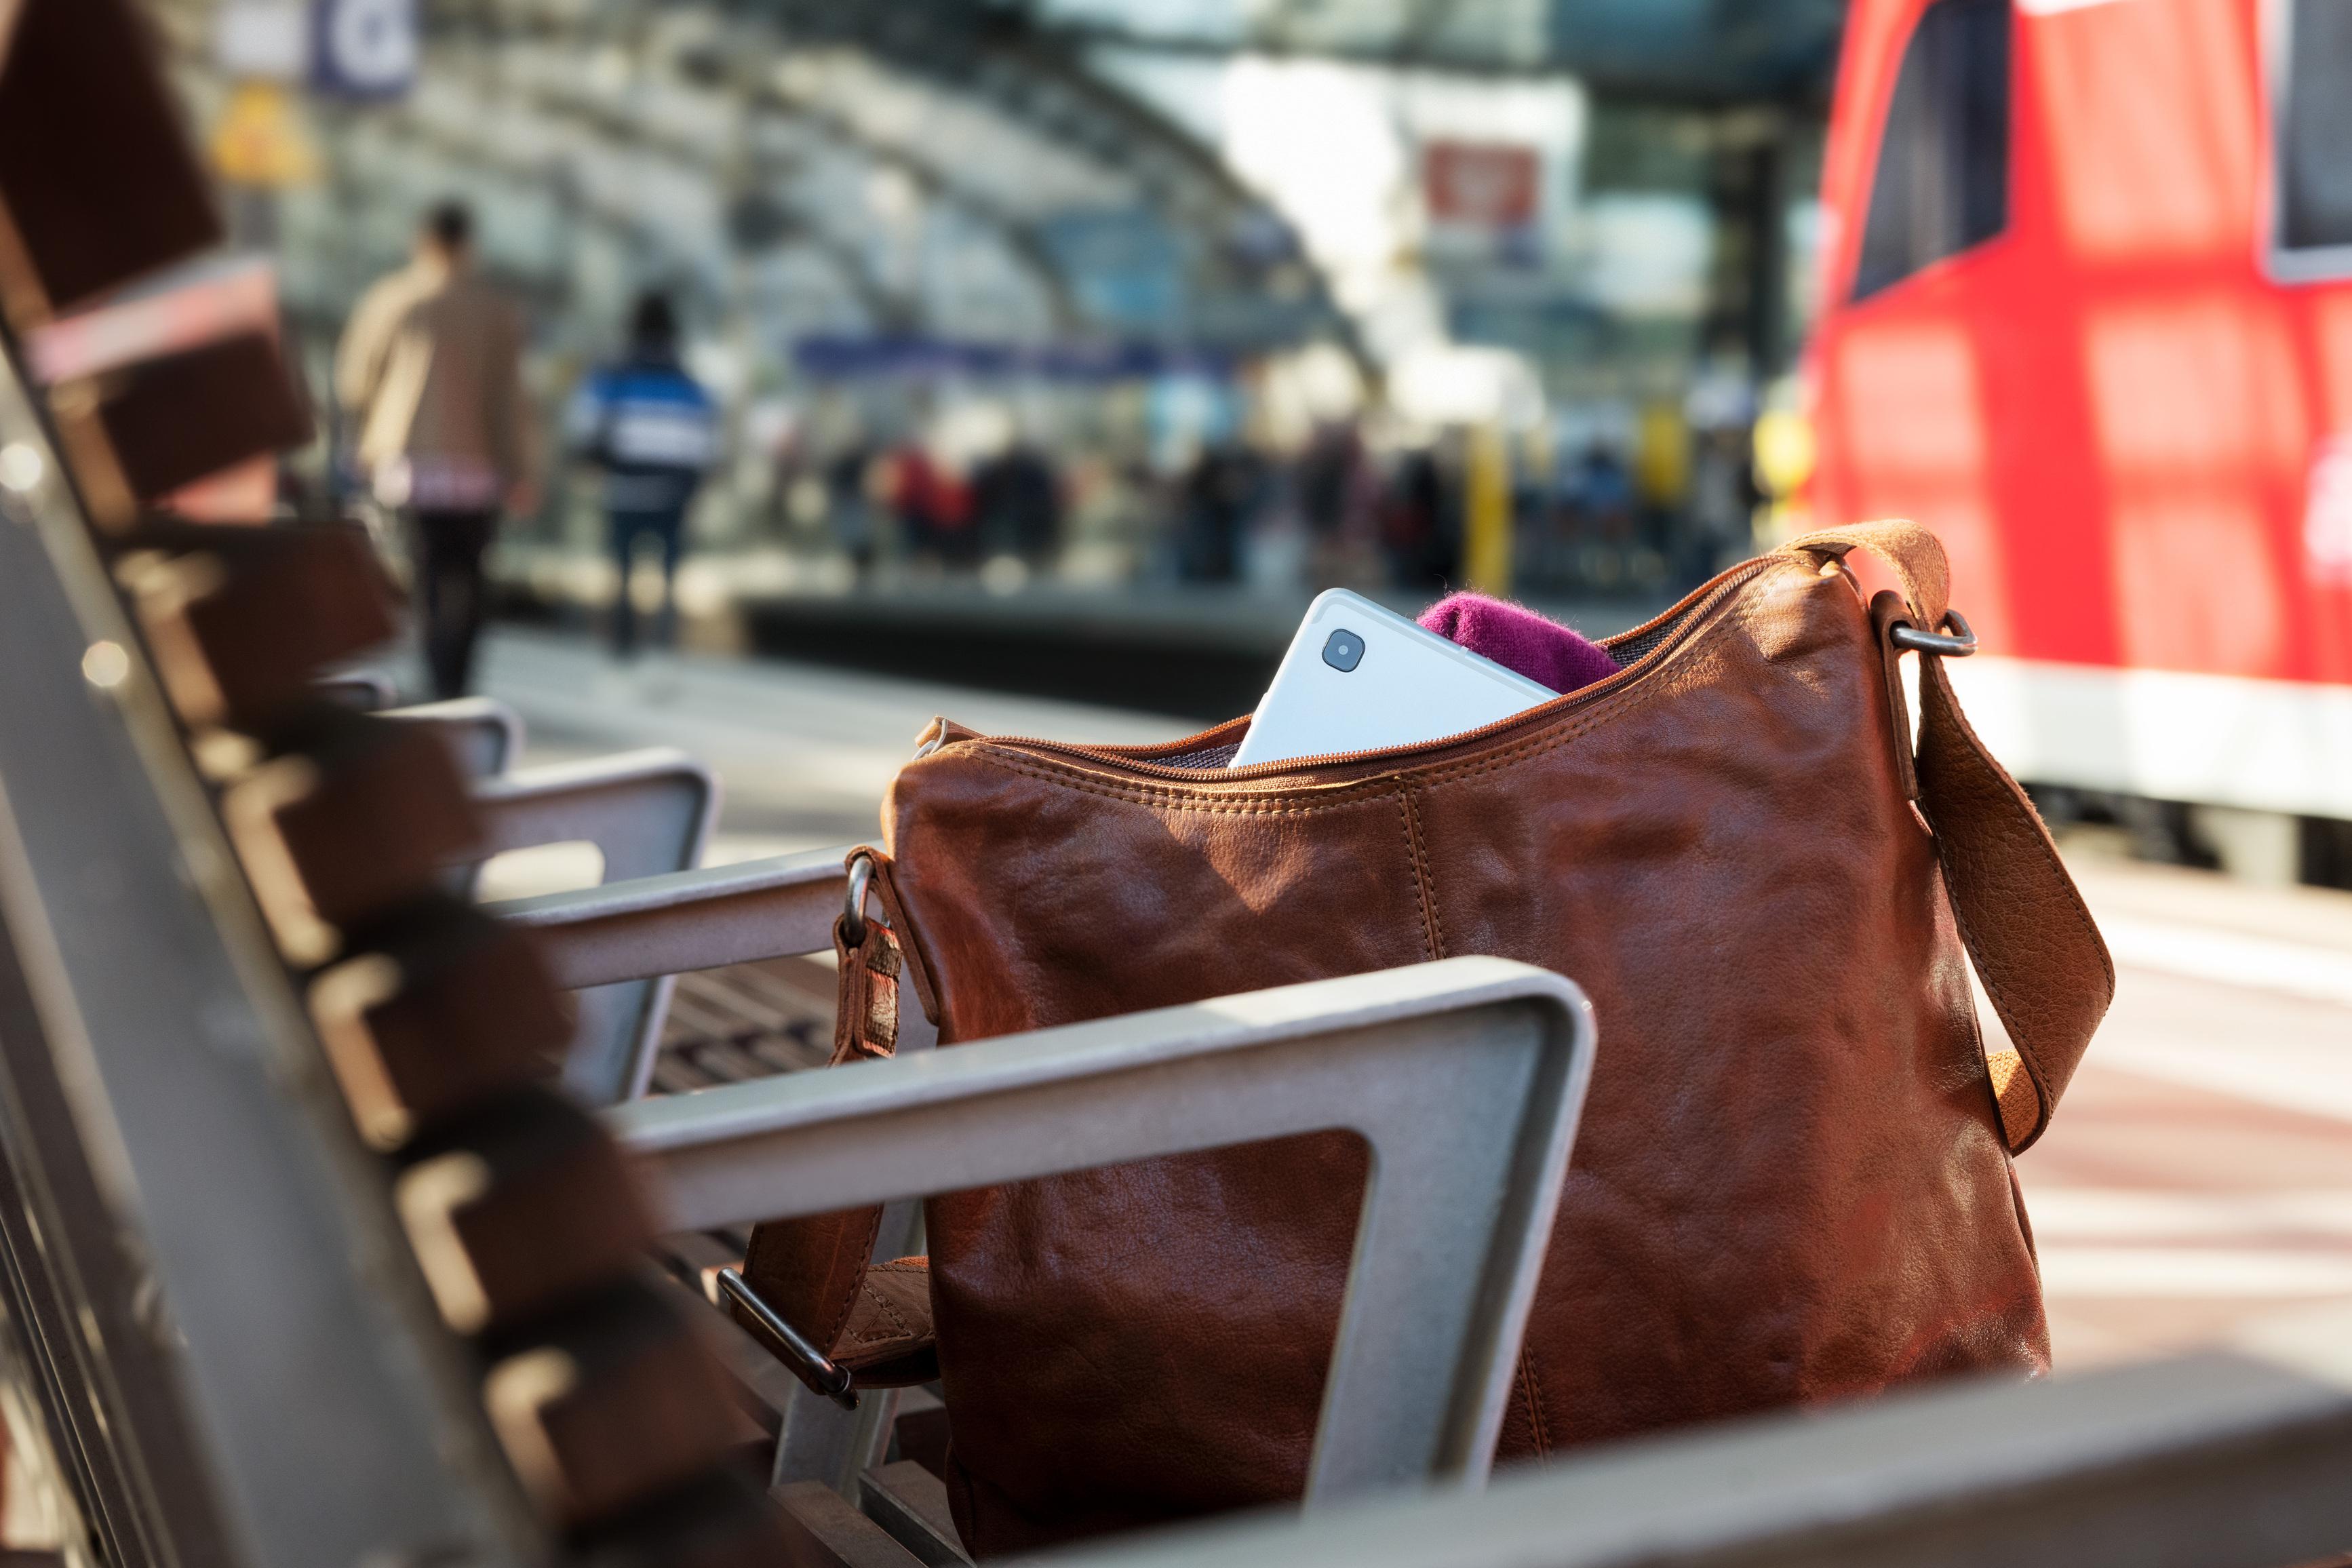 A lost handbag on a bench on the platform.